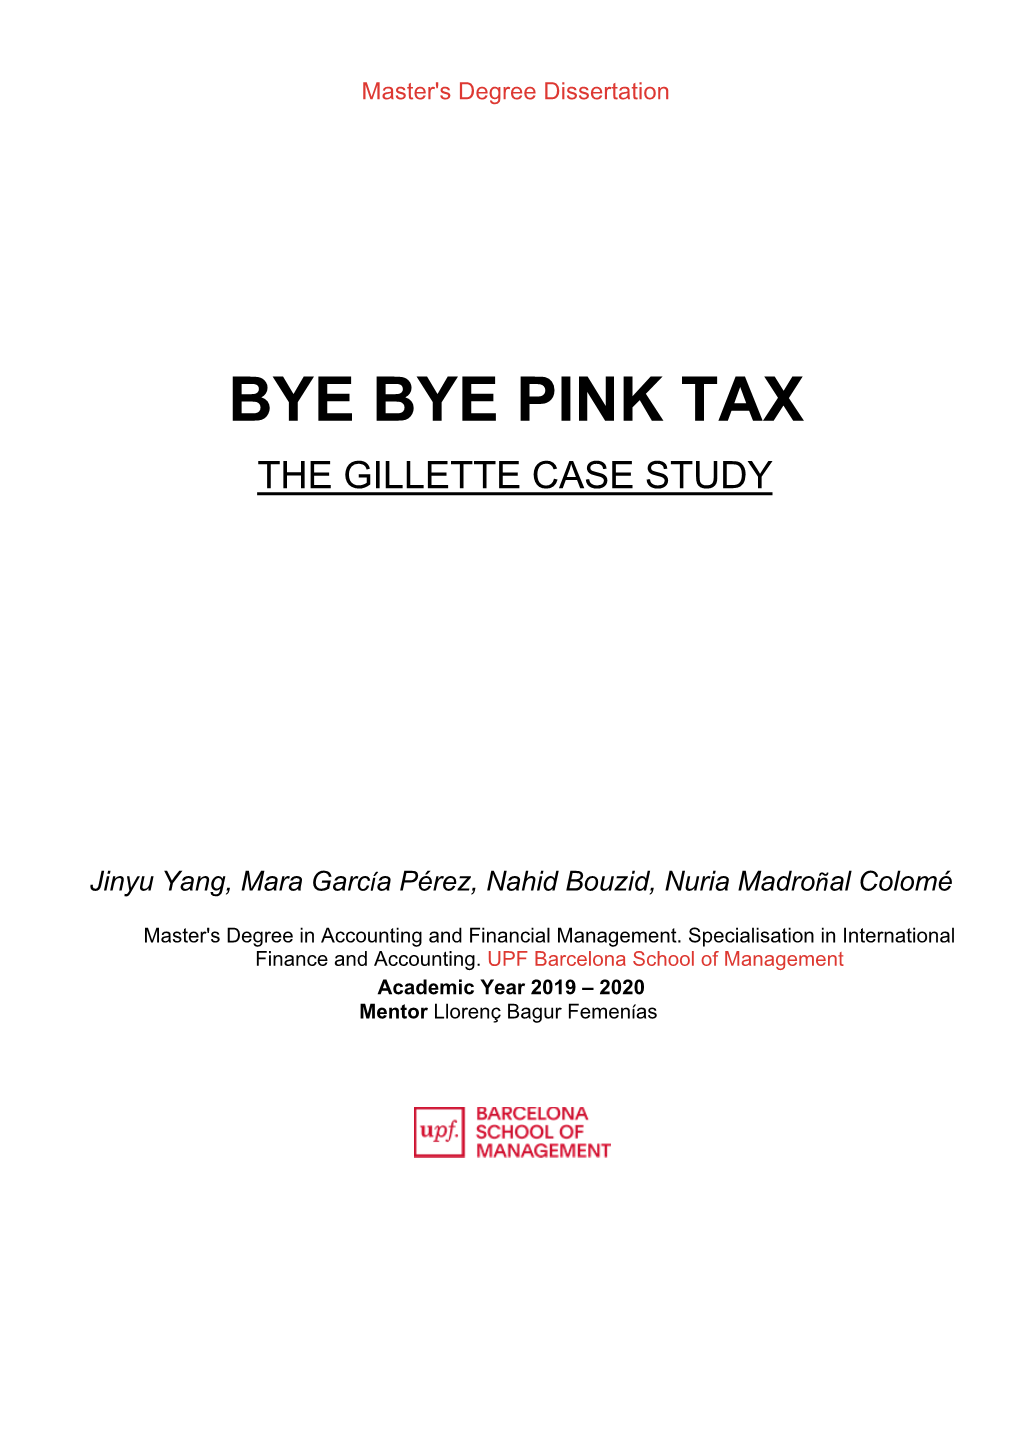 Bye Bye Pink Tax the Gillette Case Study